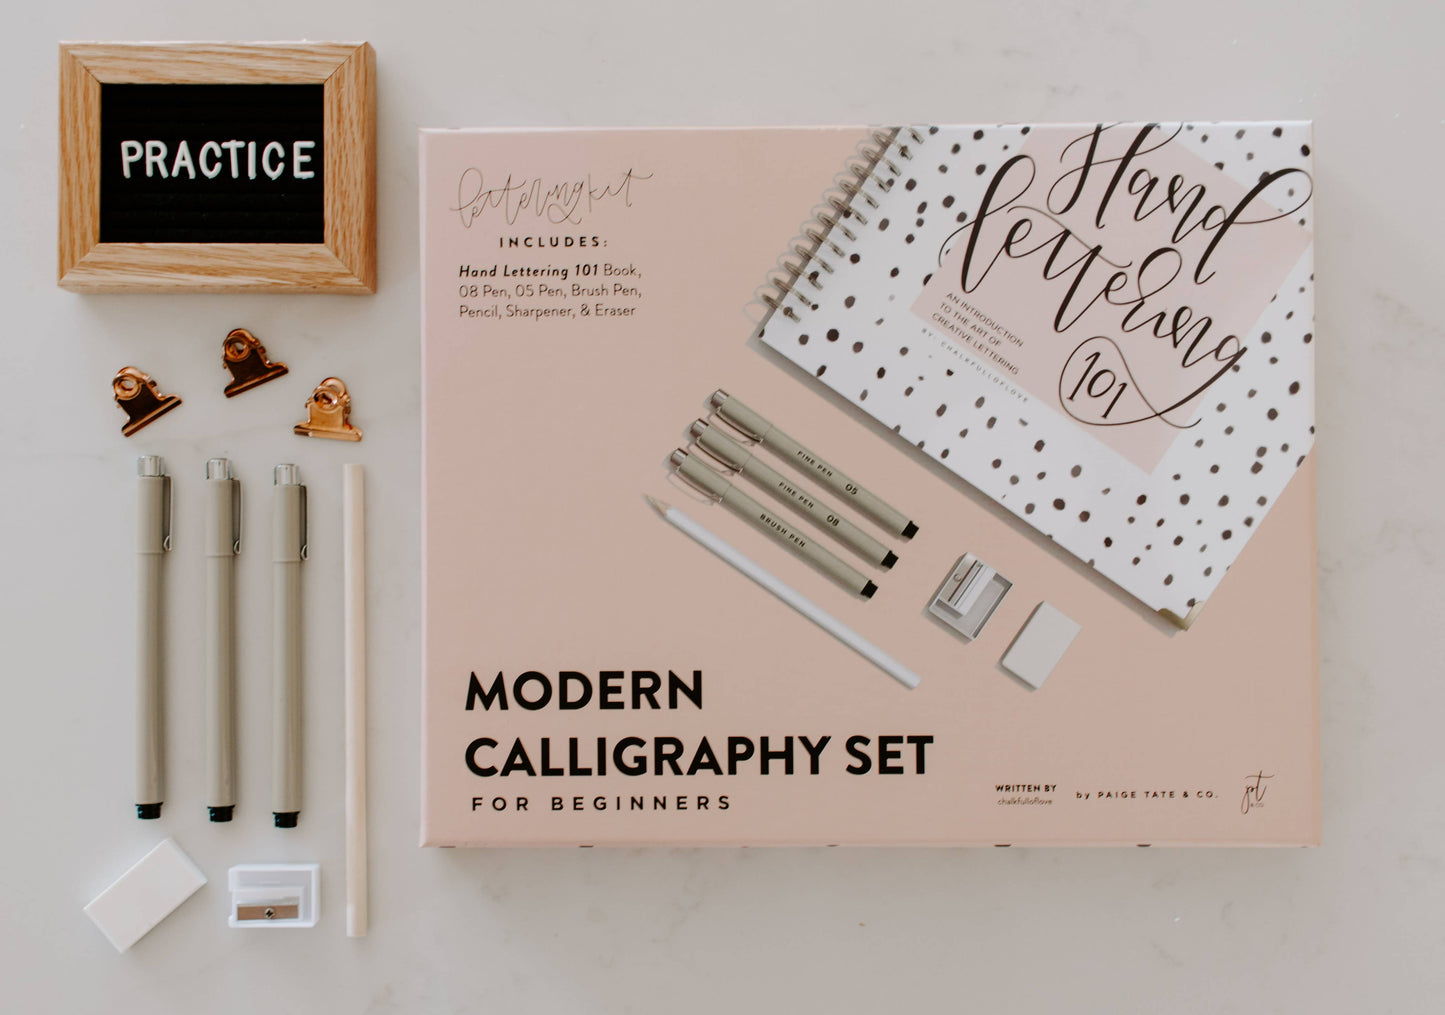 Modern Calligraphy Set for Beginners